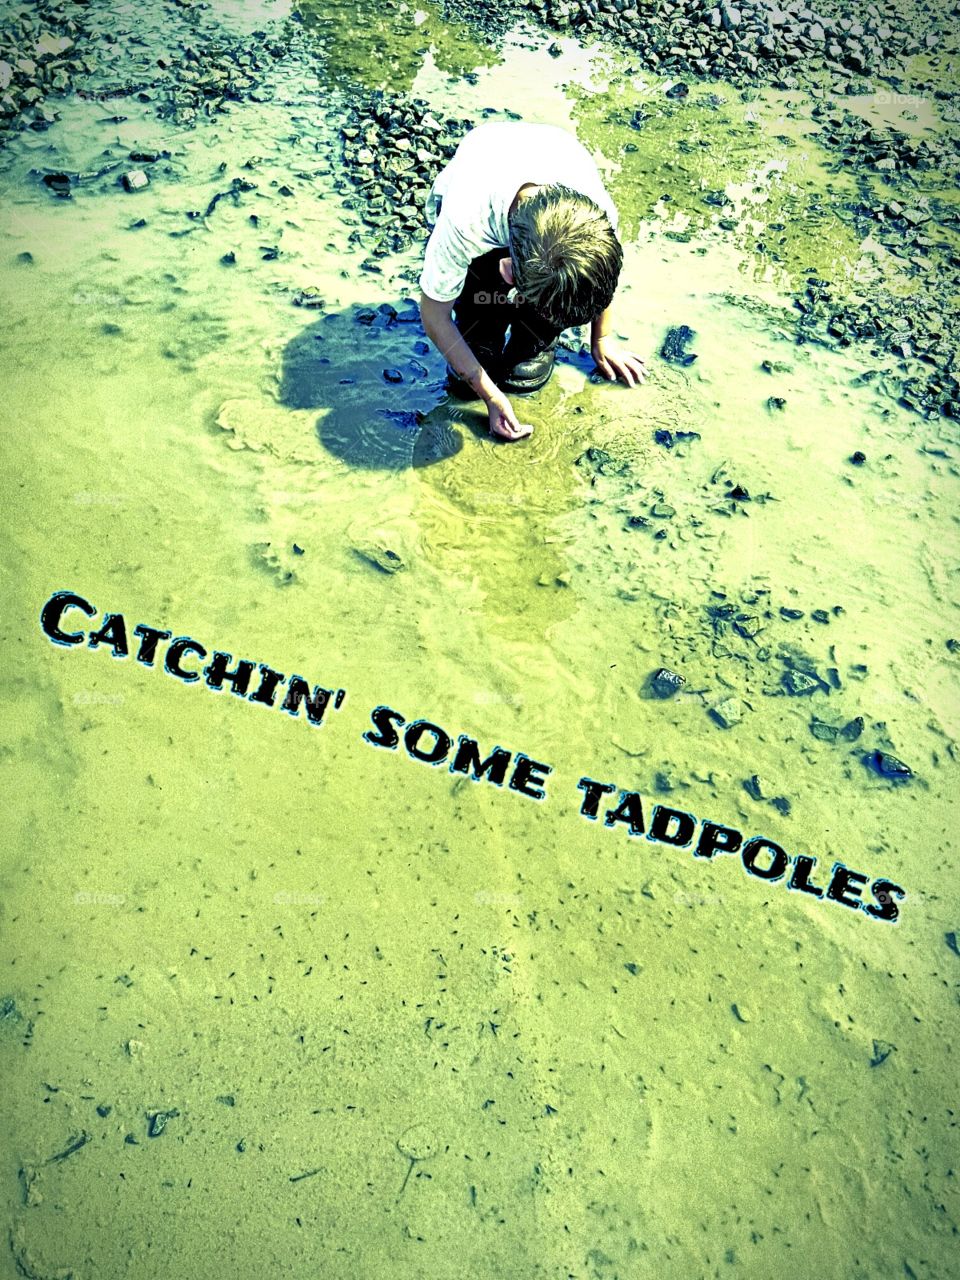 tadpole catchin